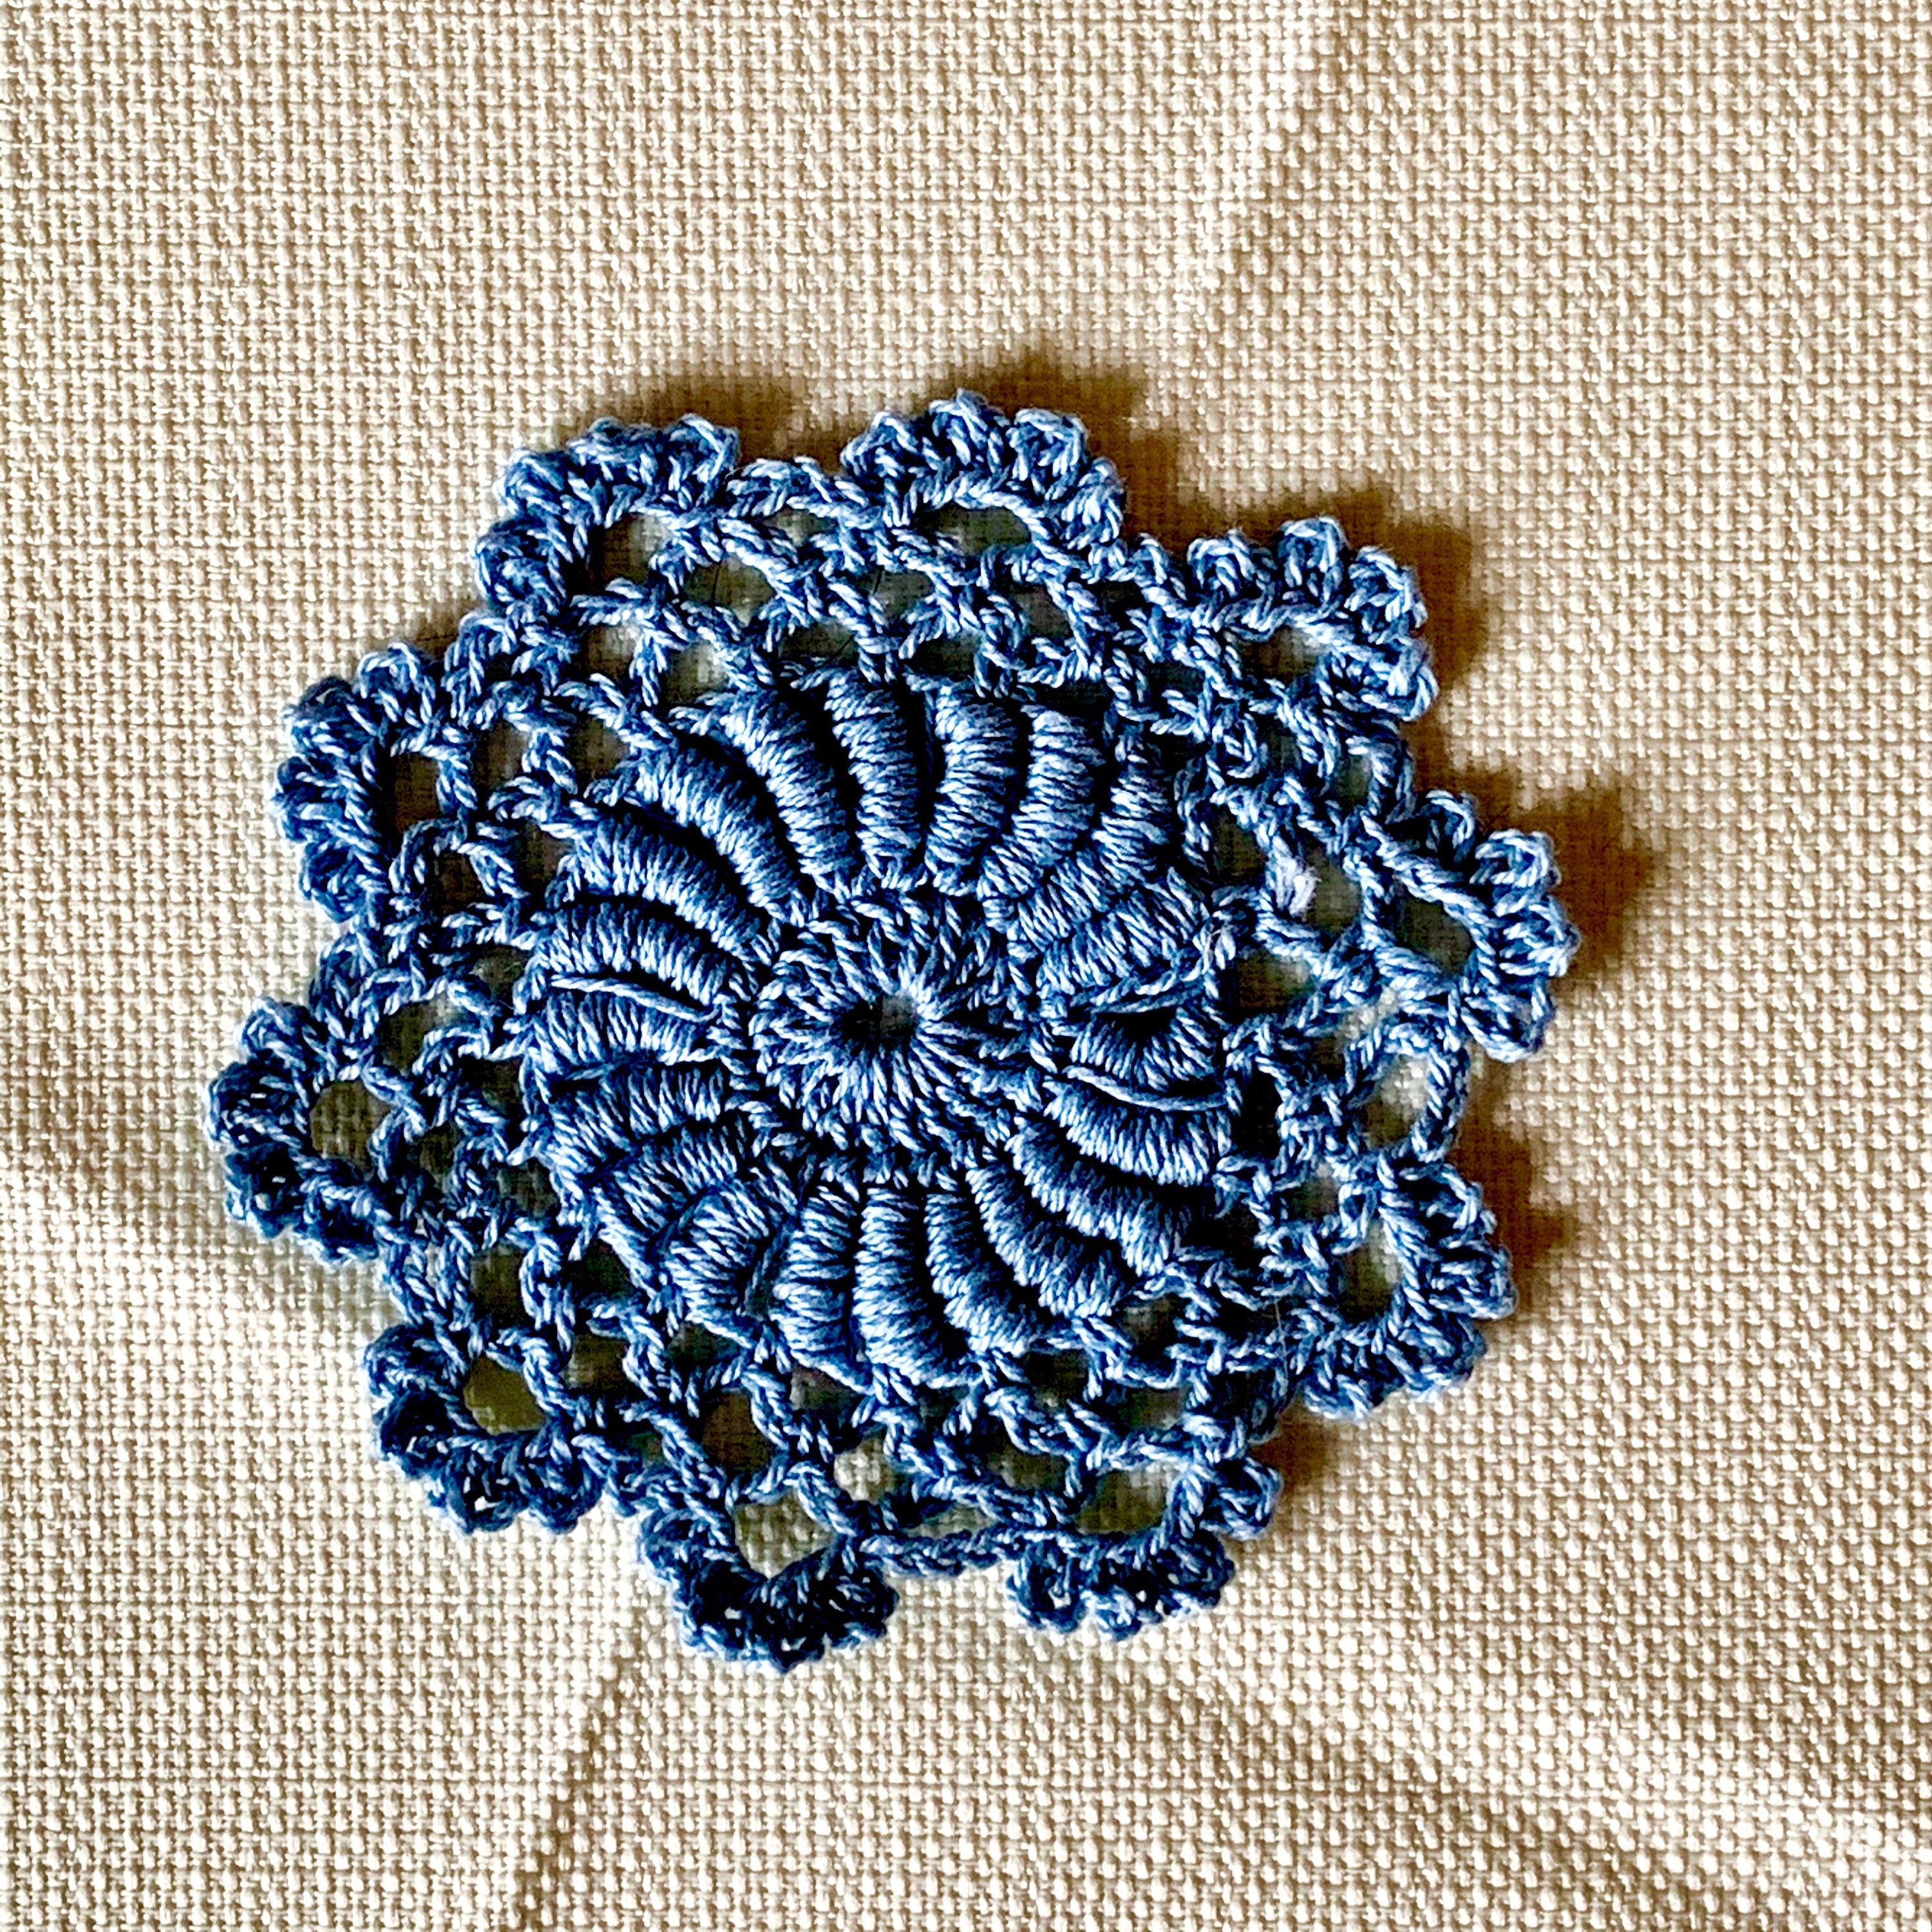 Country Blue Mini Doily Set of 6-Crochet Doily -Cotton Doily-Craft Doily-Country Blue Doily-3 inch Doily